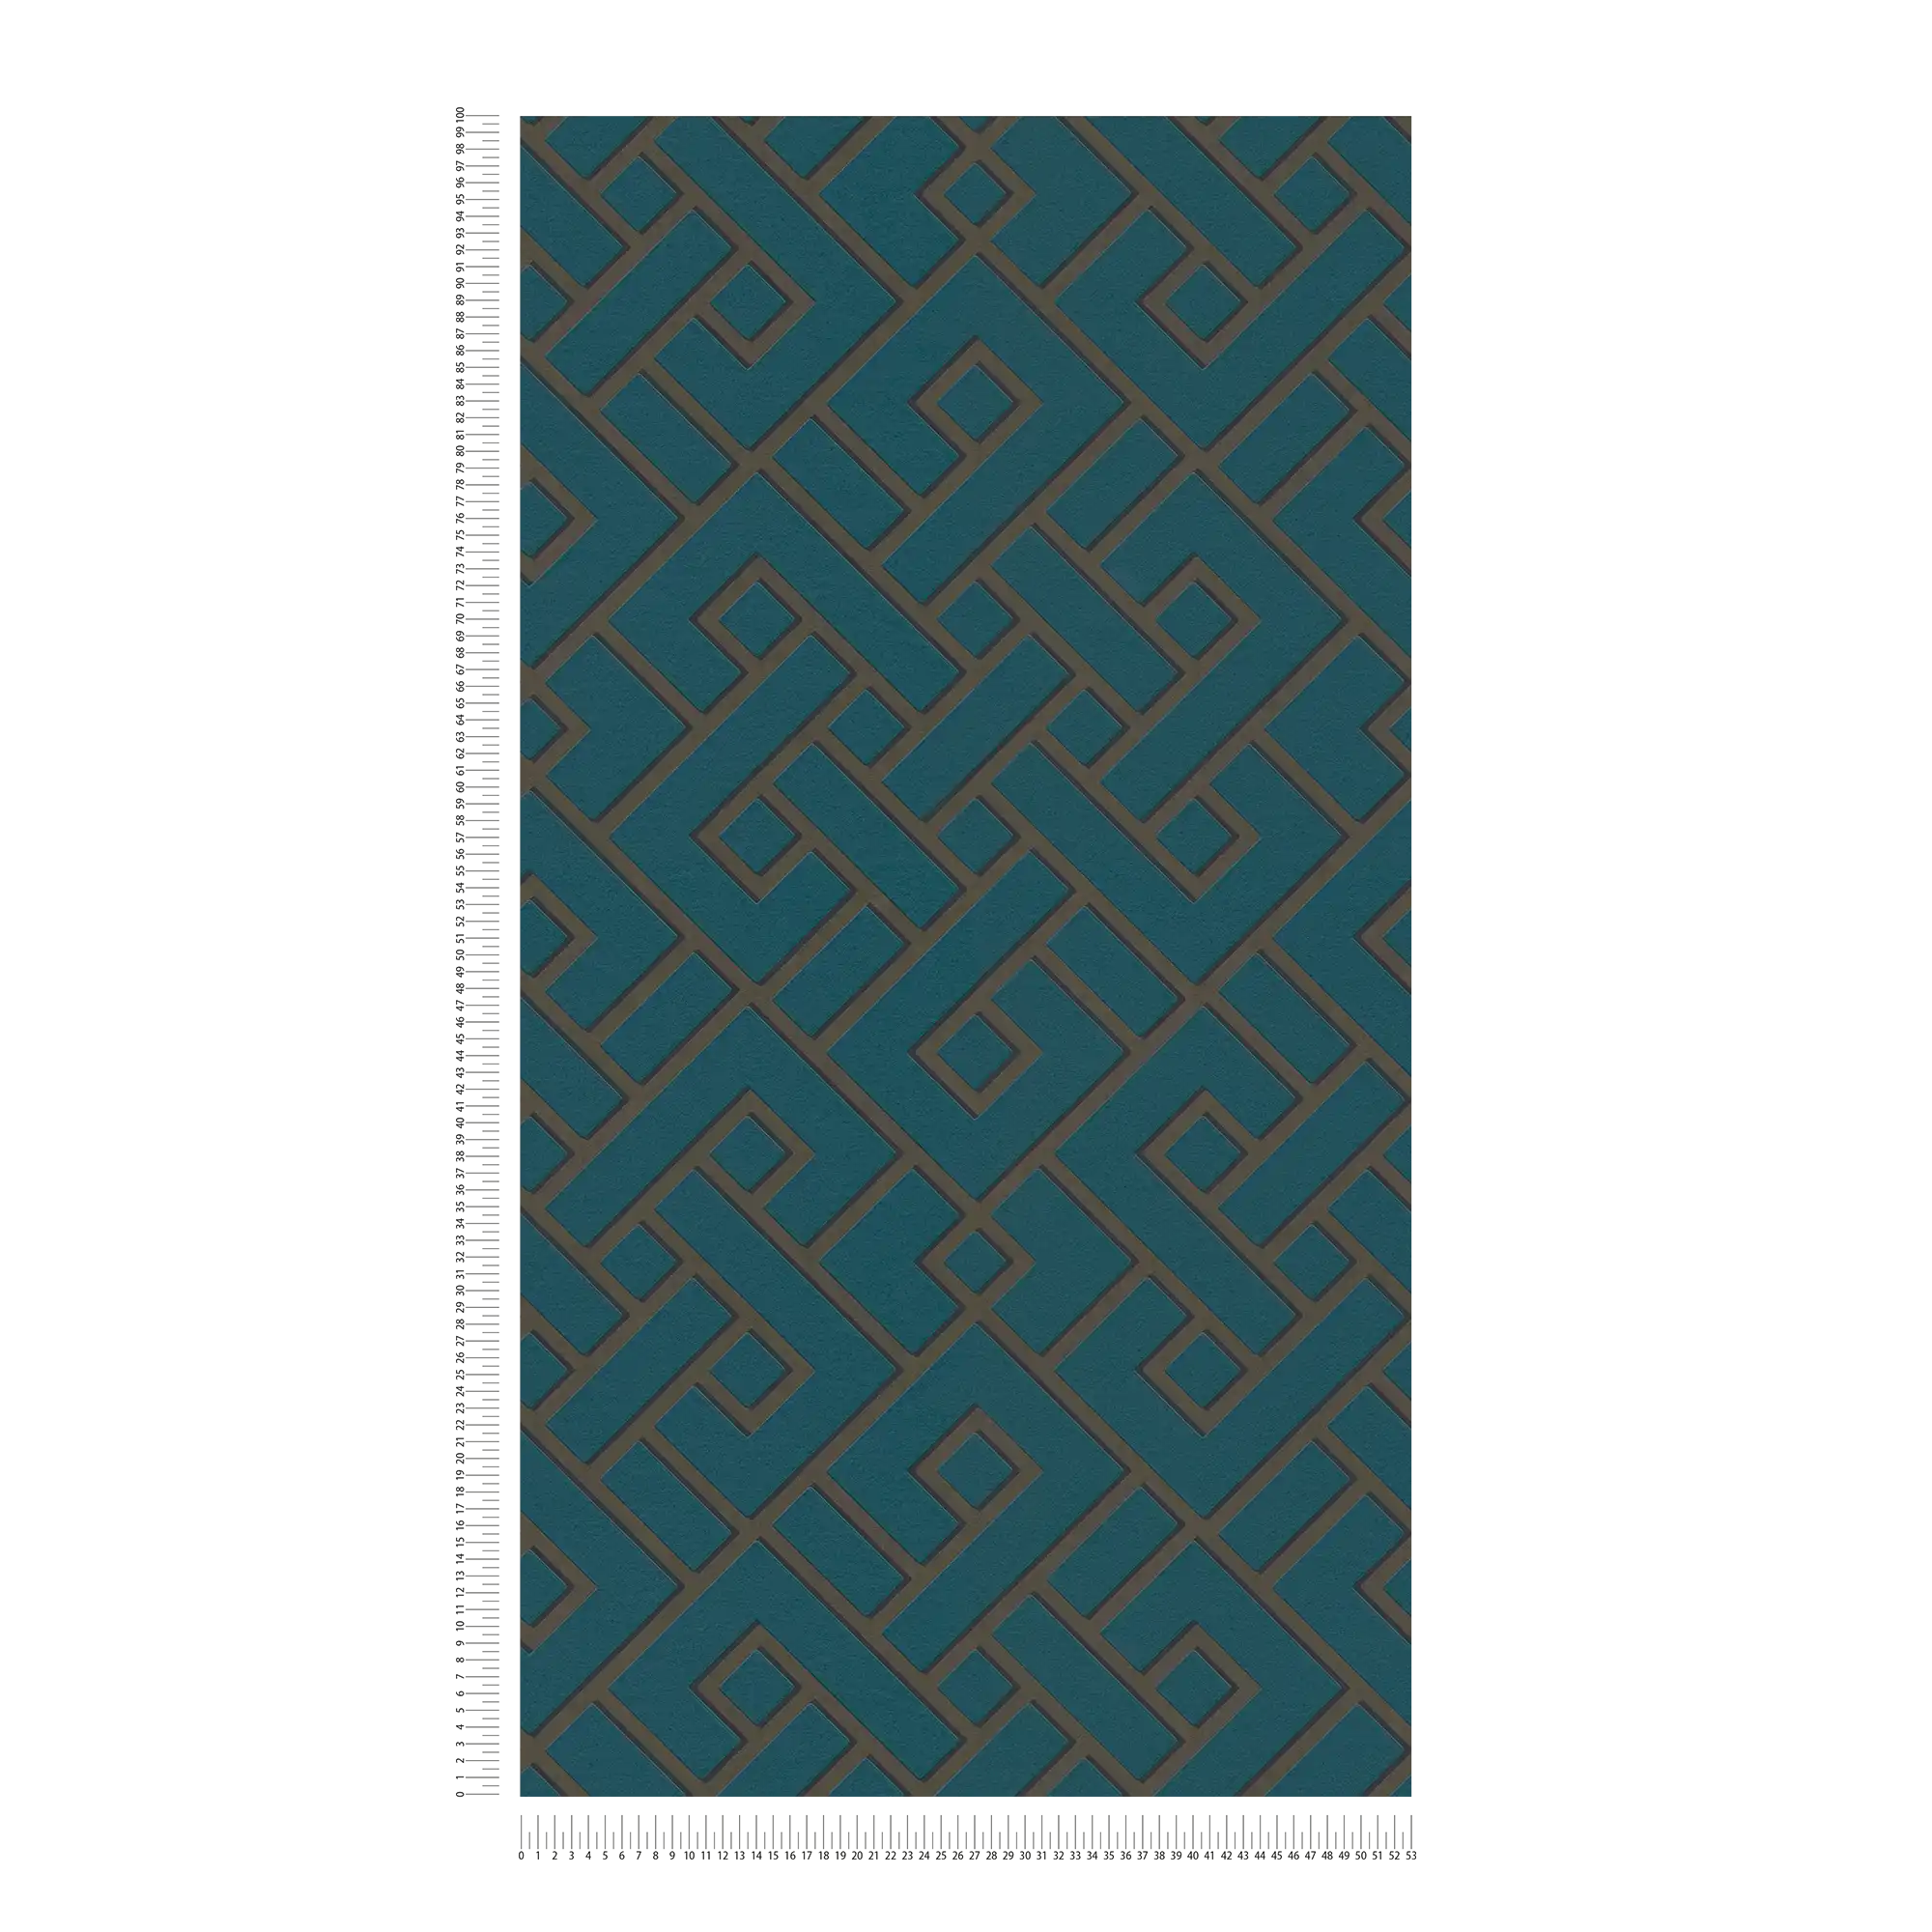             Design wallpaper petrol from MICHALSKY with 3D pattern - green, metallic
        